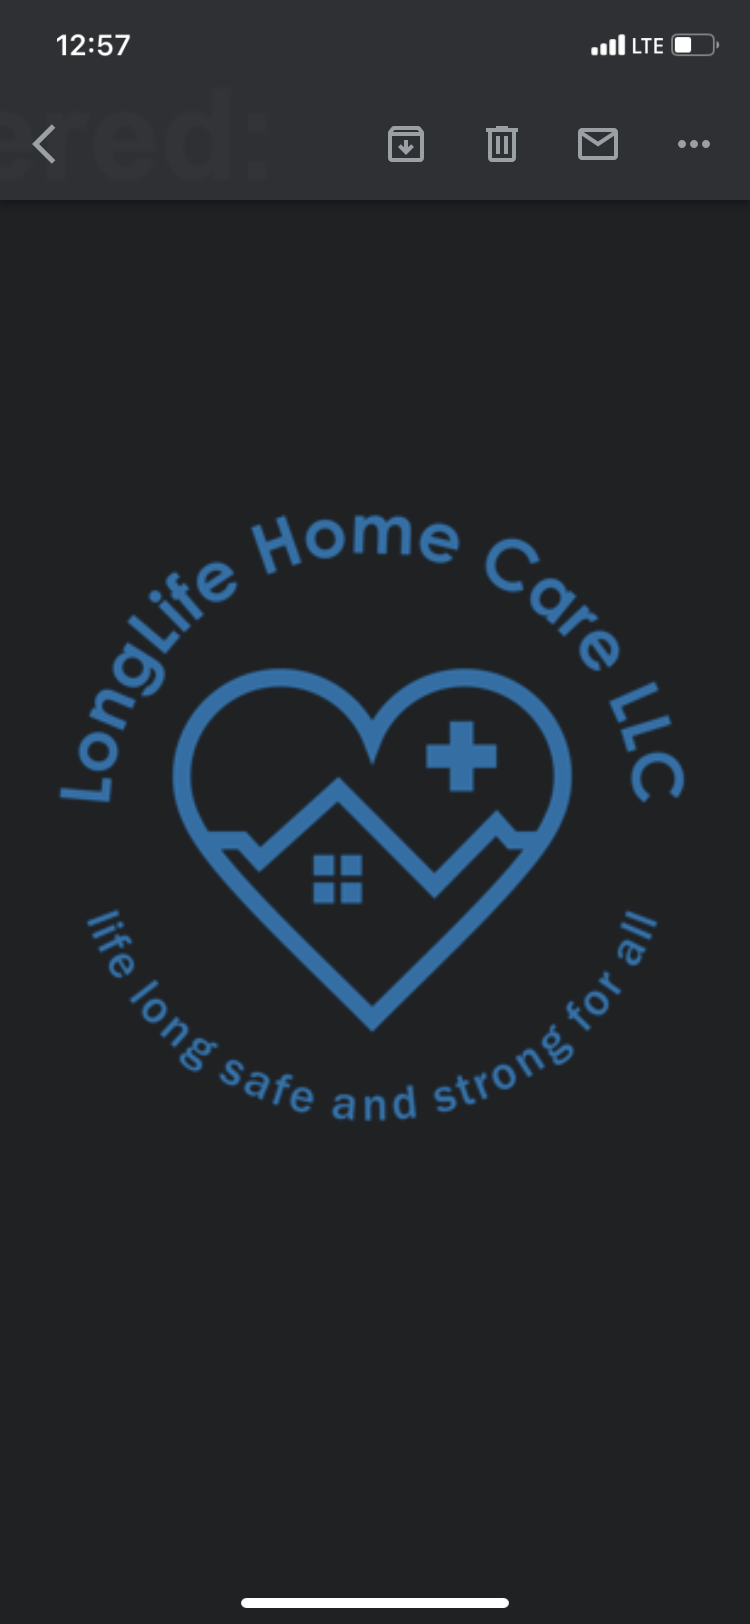 Long Life Home Care LLC